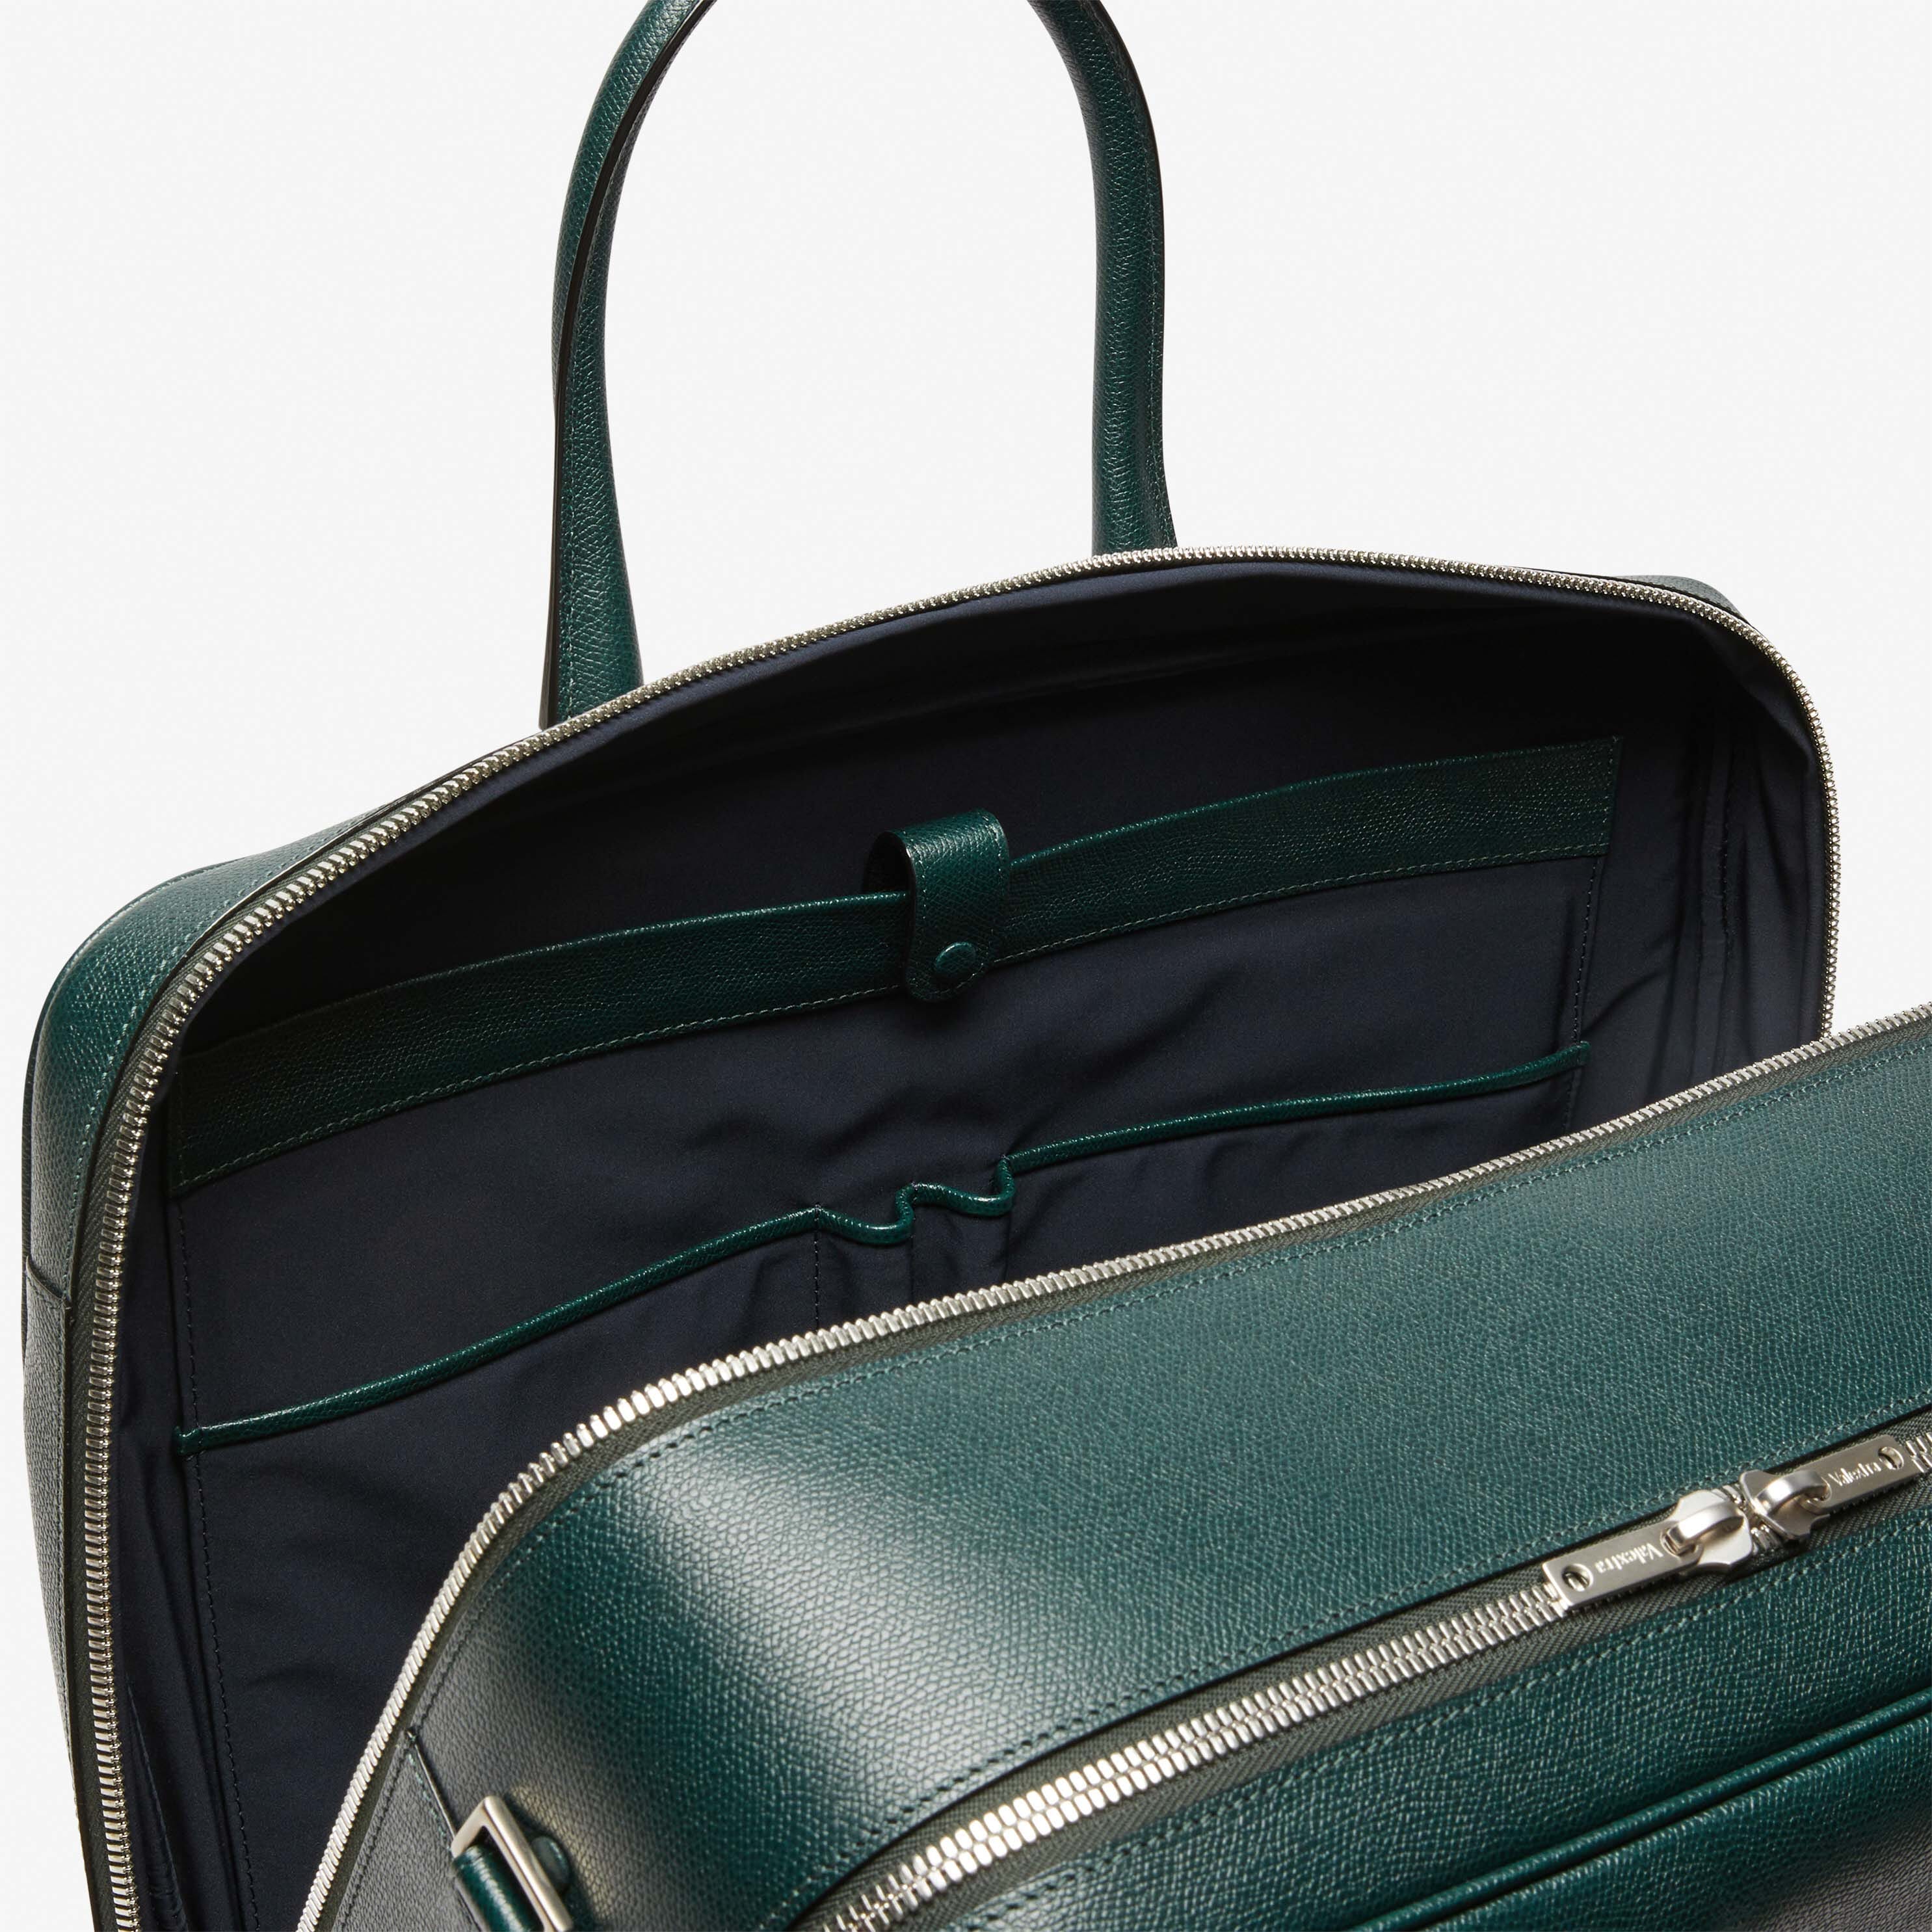 Avietta Travel Bag Two Chambers - Valextra Green - Vitello VS - Valextra - 2